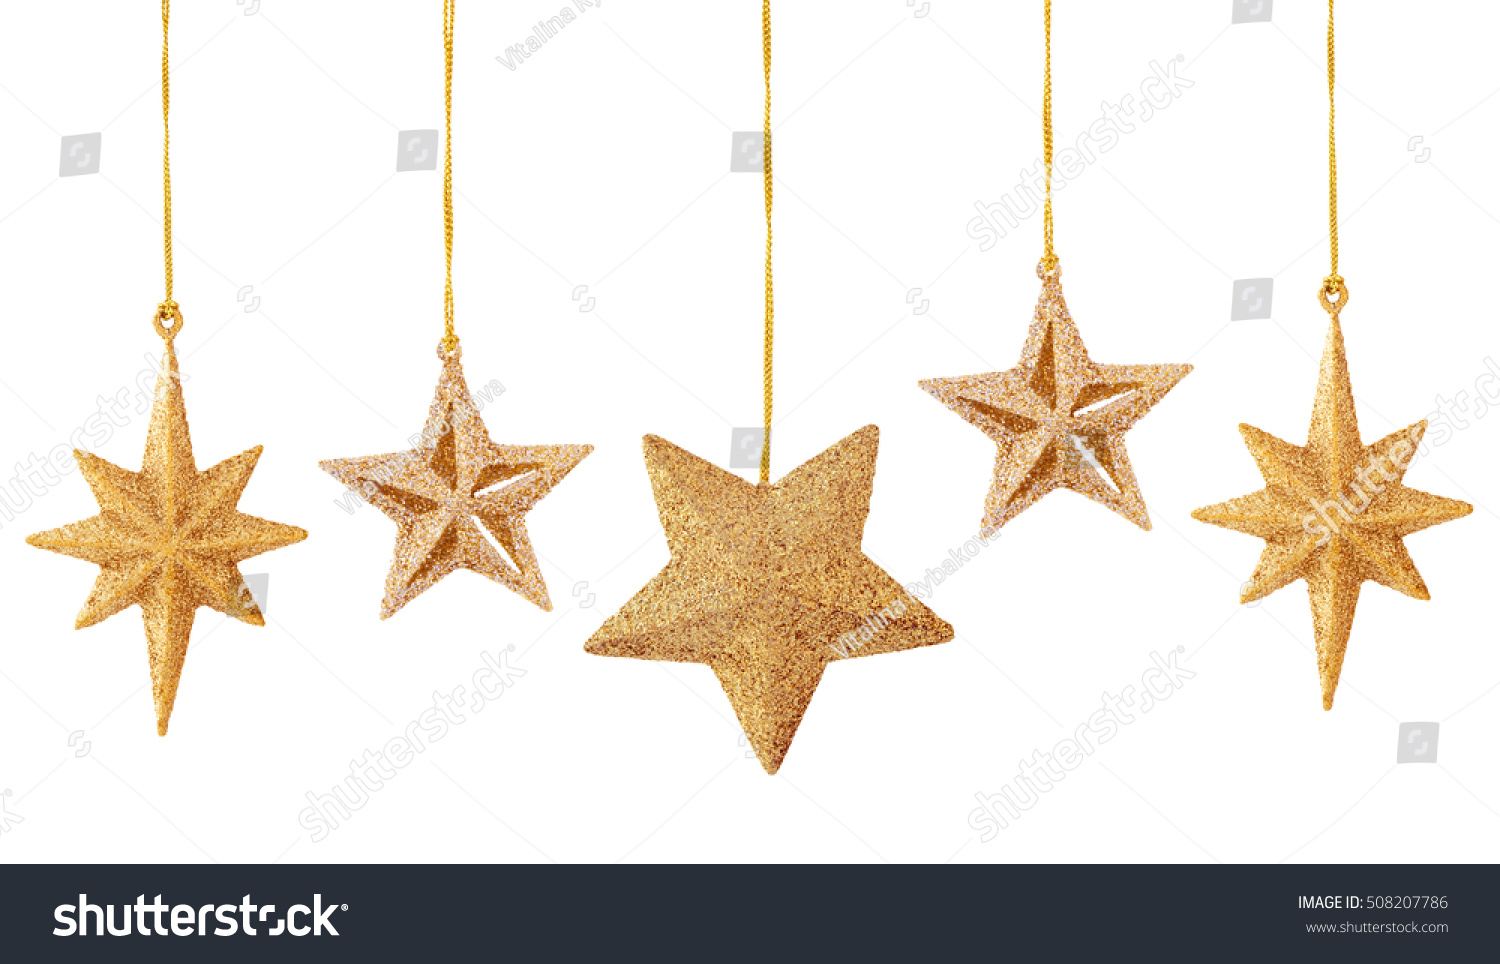 Set of gold stars isolated on white background. #508207786